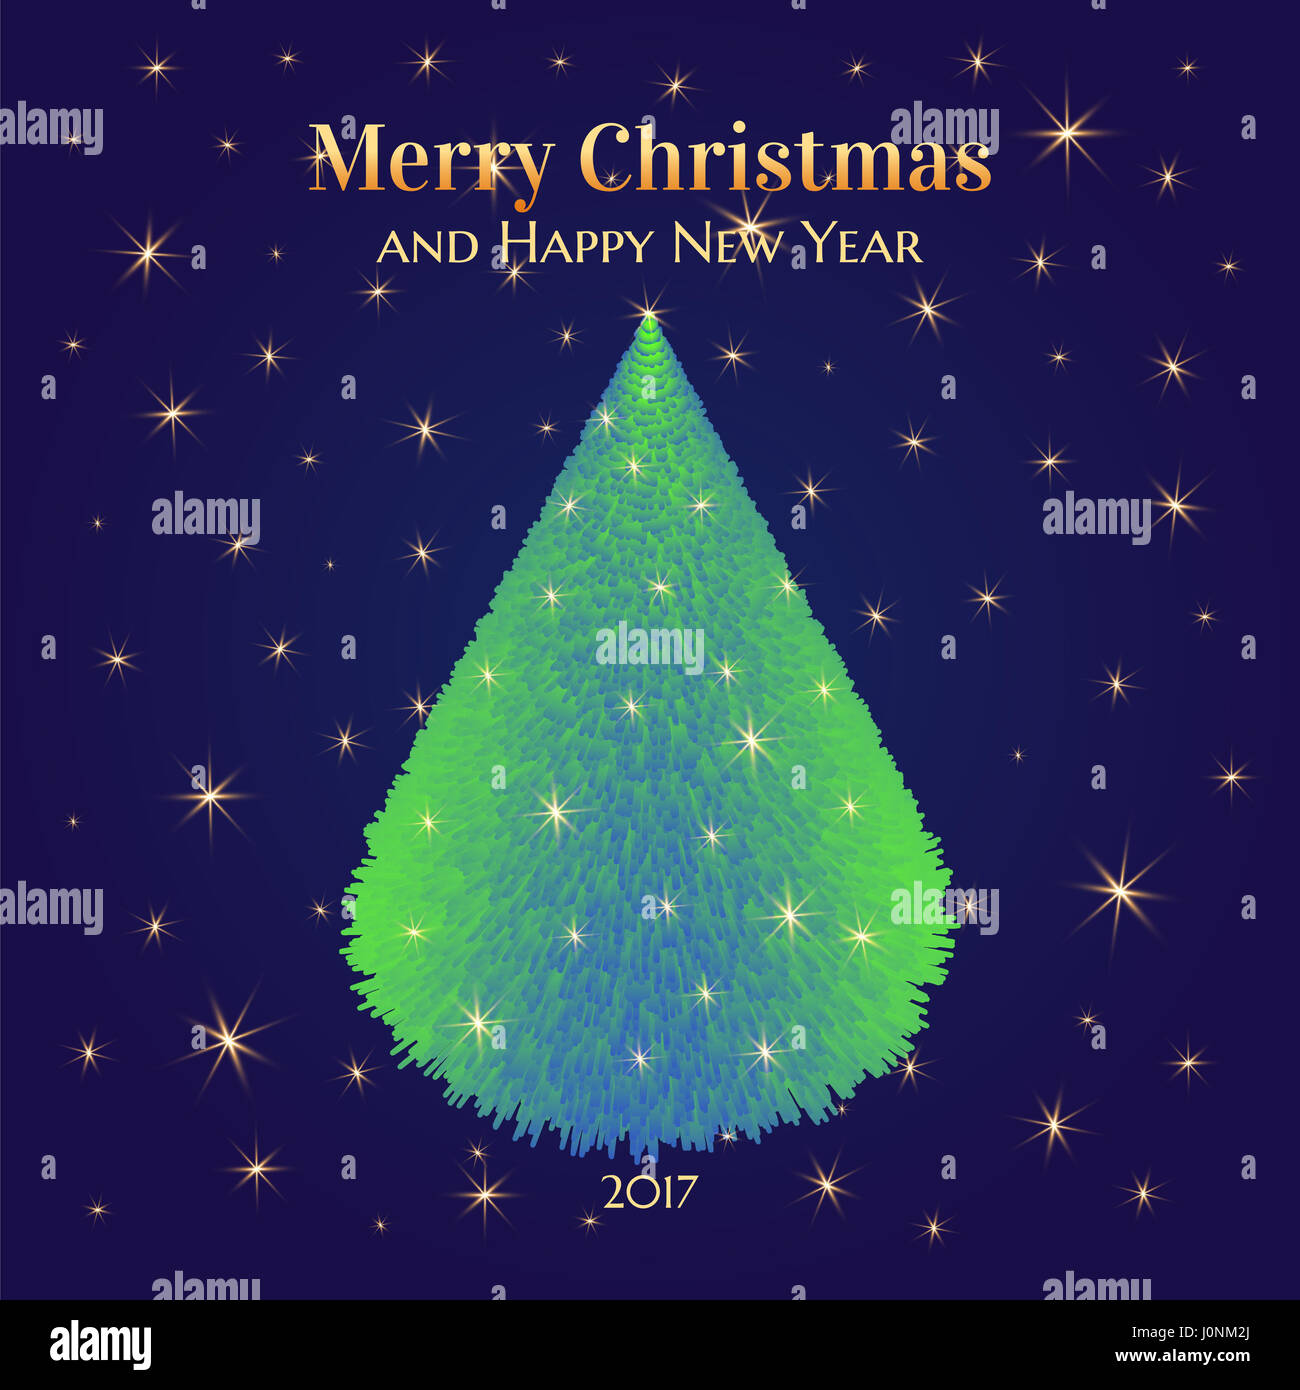 greeting card Merry Christmas Stock Photo